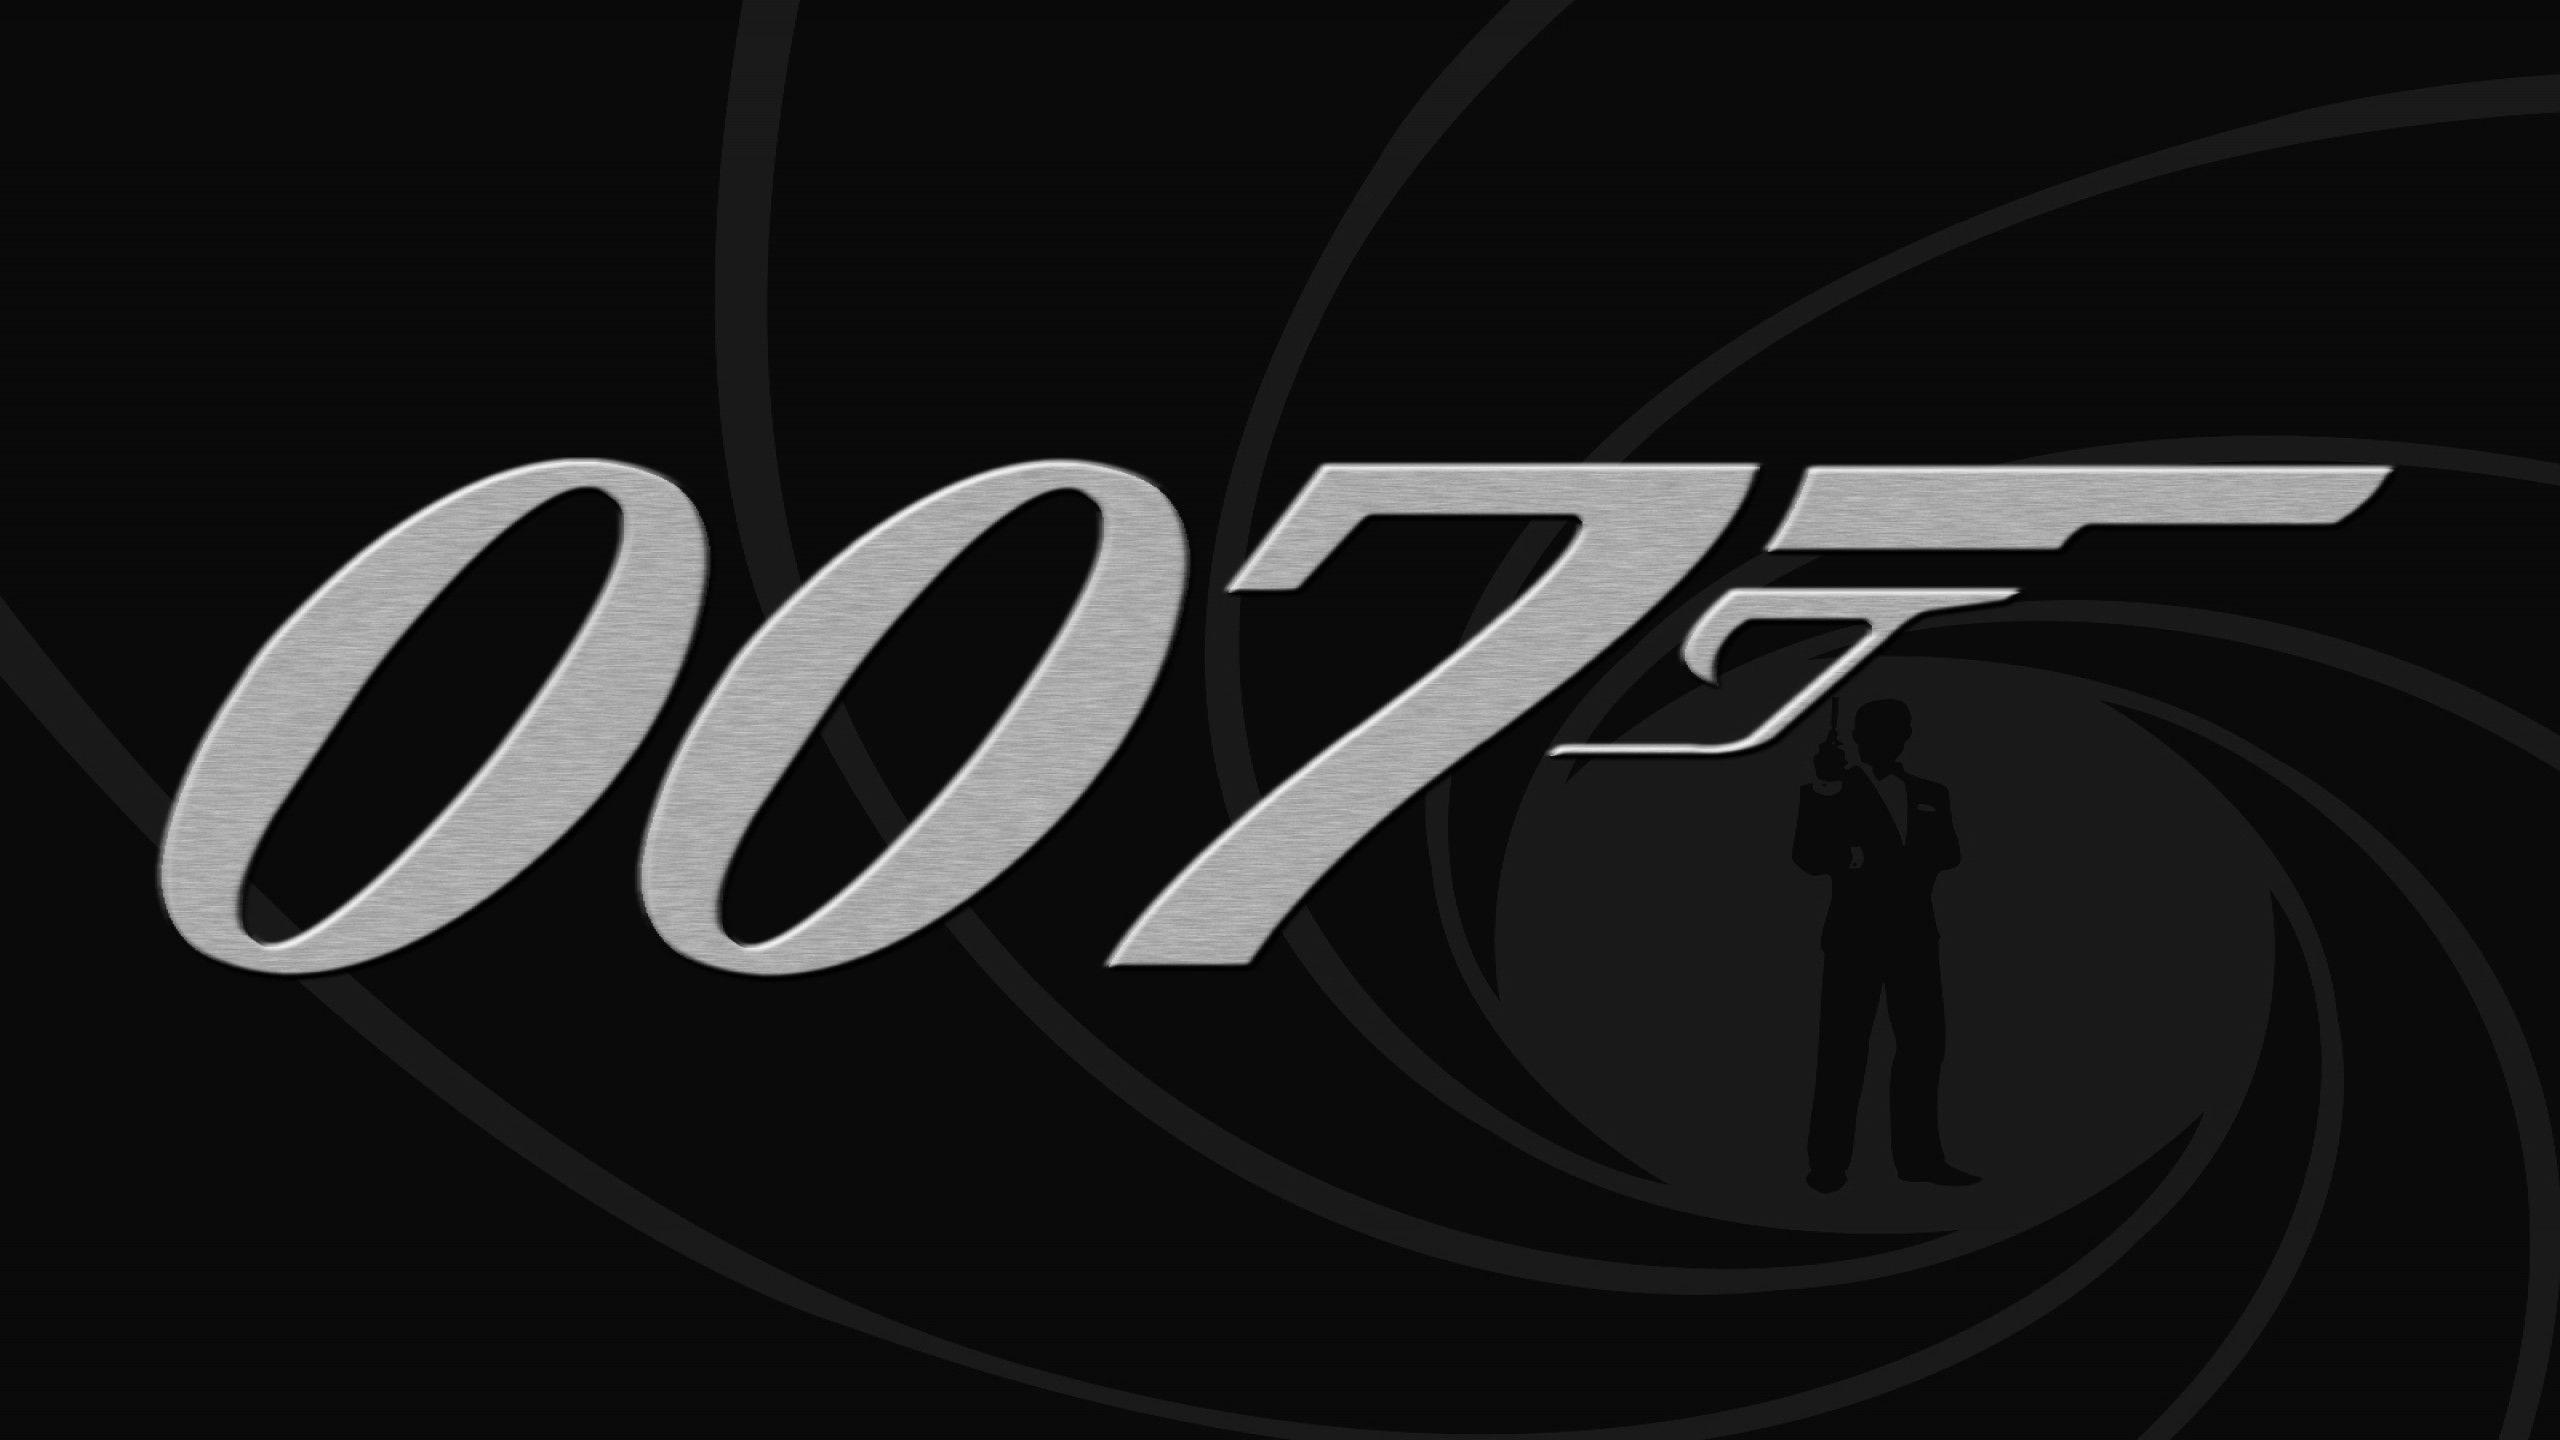 Logo 007 Wallpapers - Wallpaper Cave